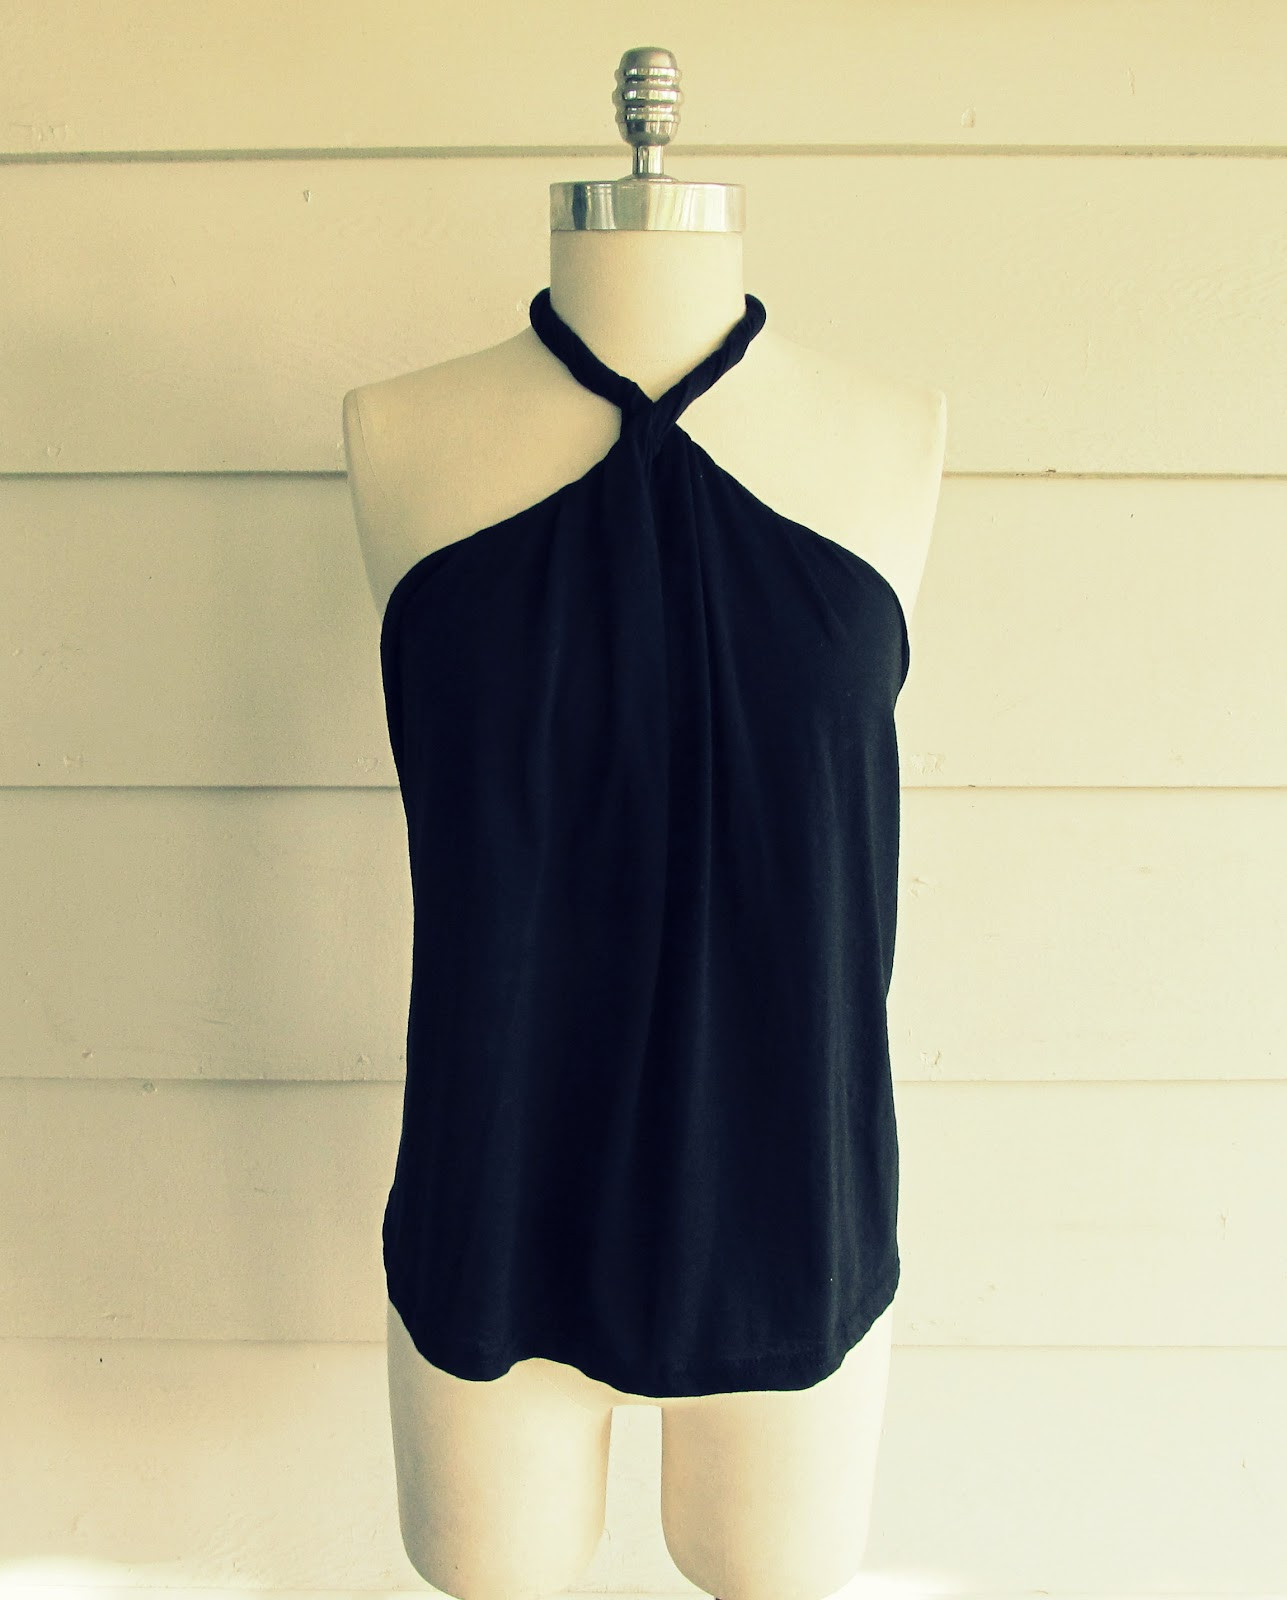 Best ideas about DIY T Shirt
. Save or Pin WobiSobi No Sew DIY Tee Shirt Halter 2 Now.